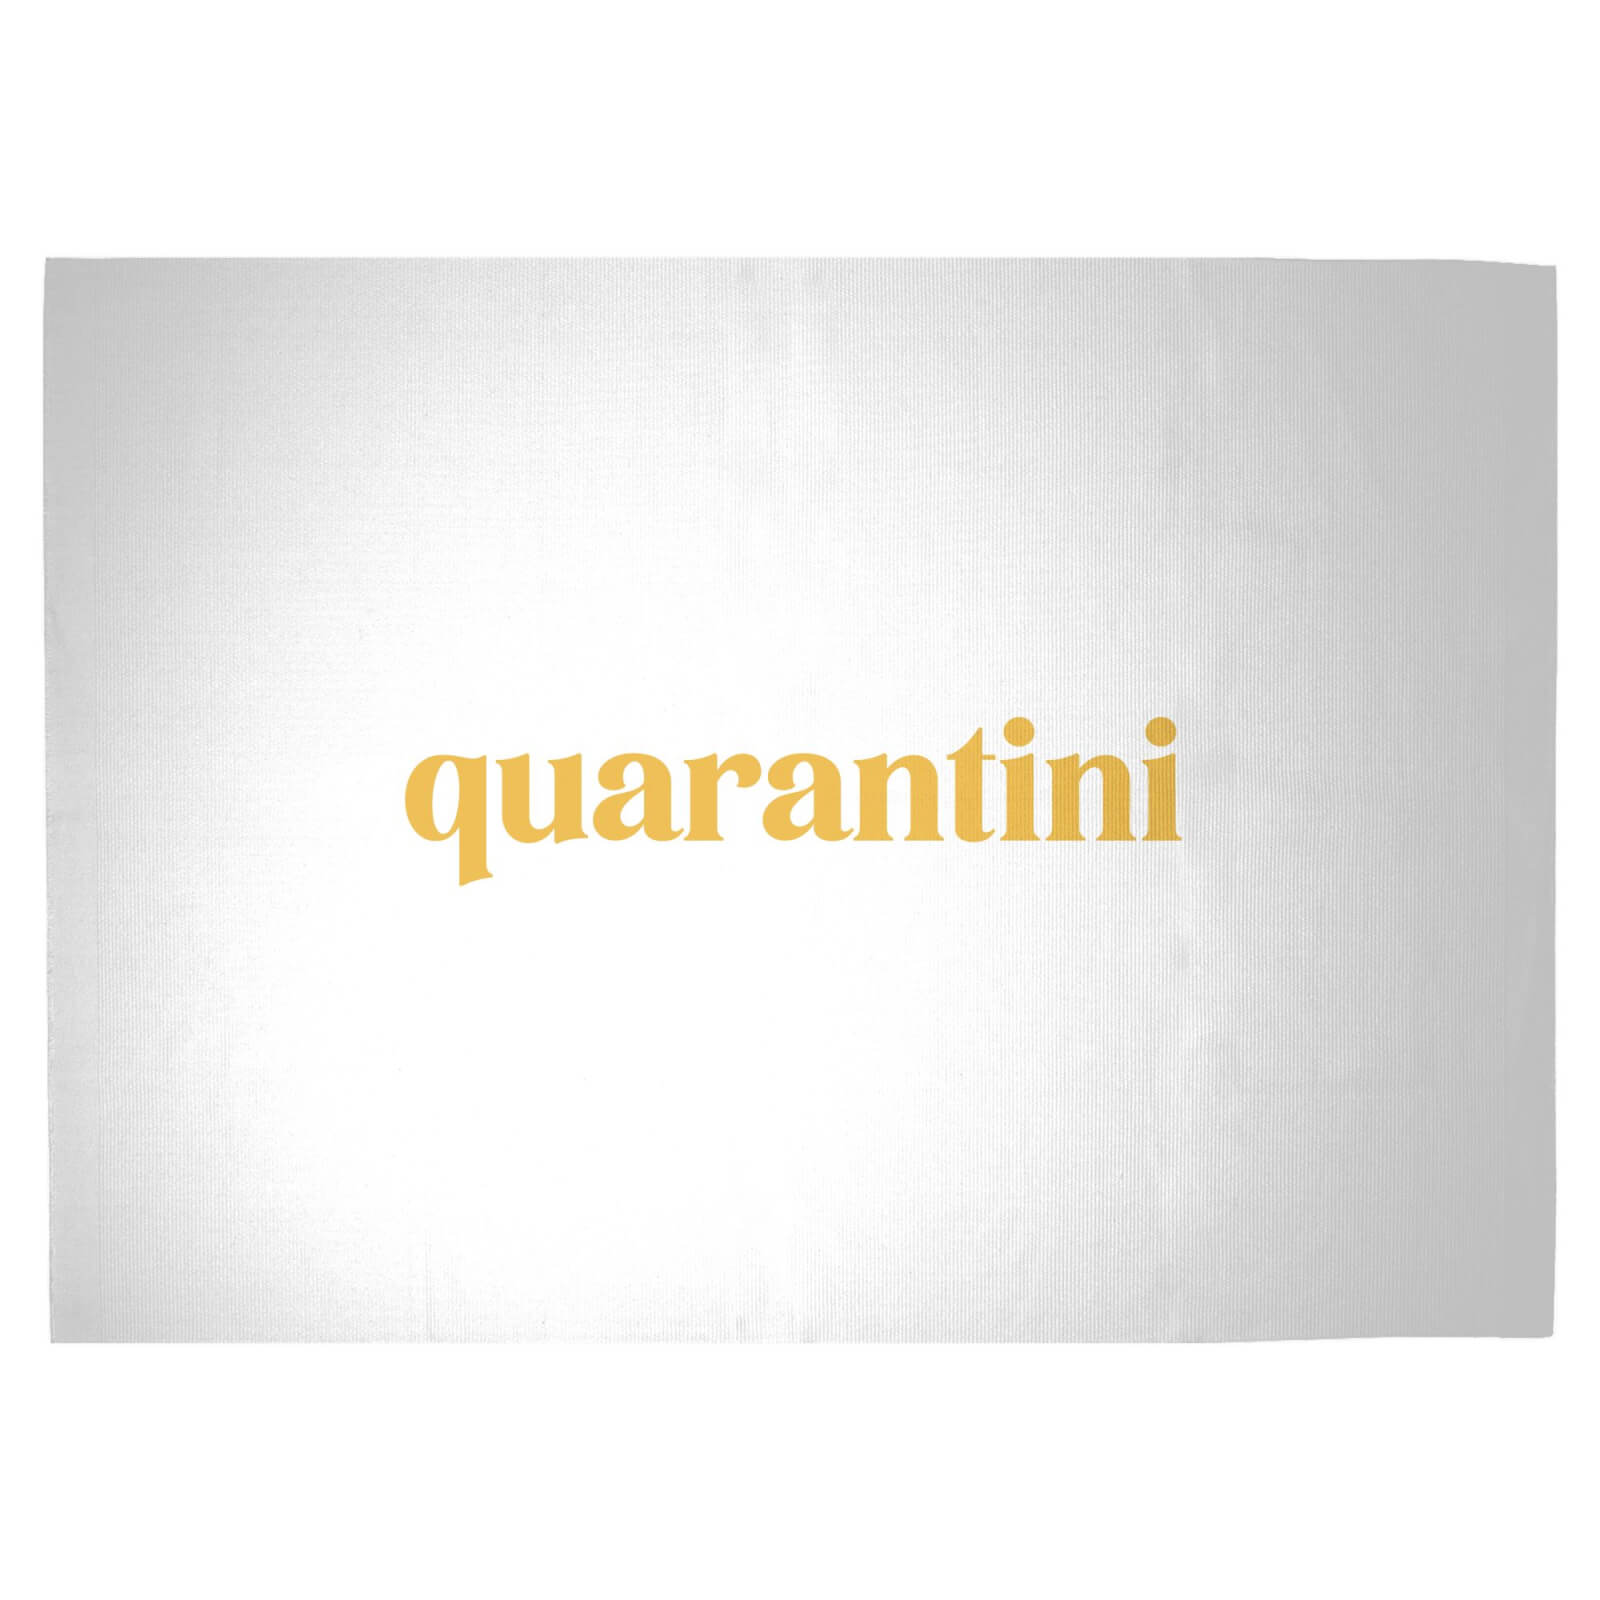 Quarantini Woven Rug - Large